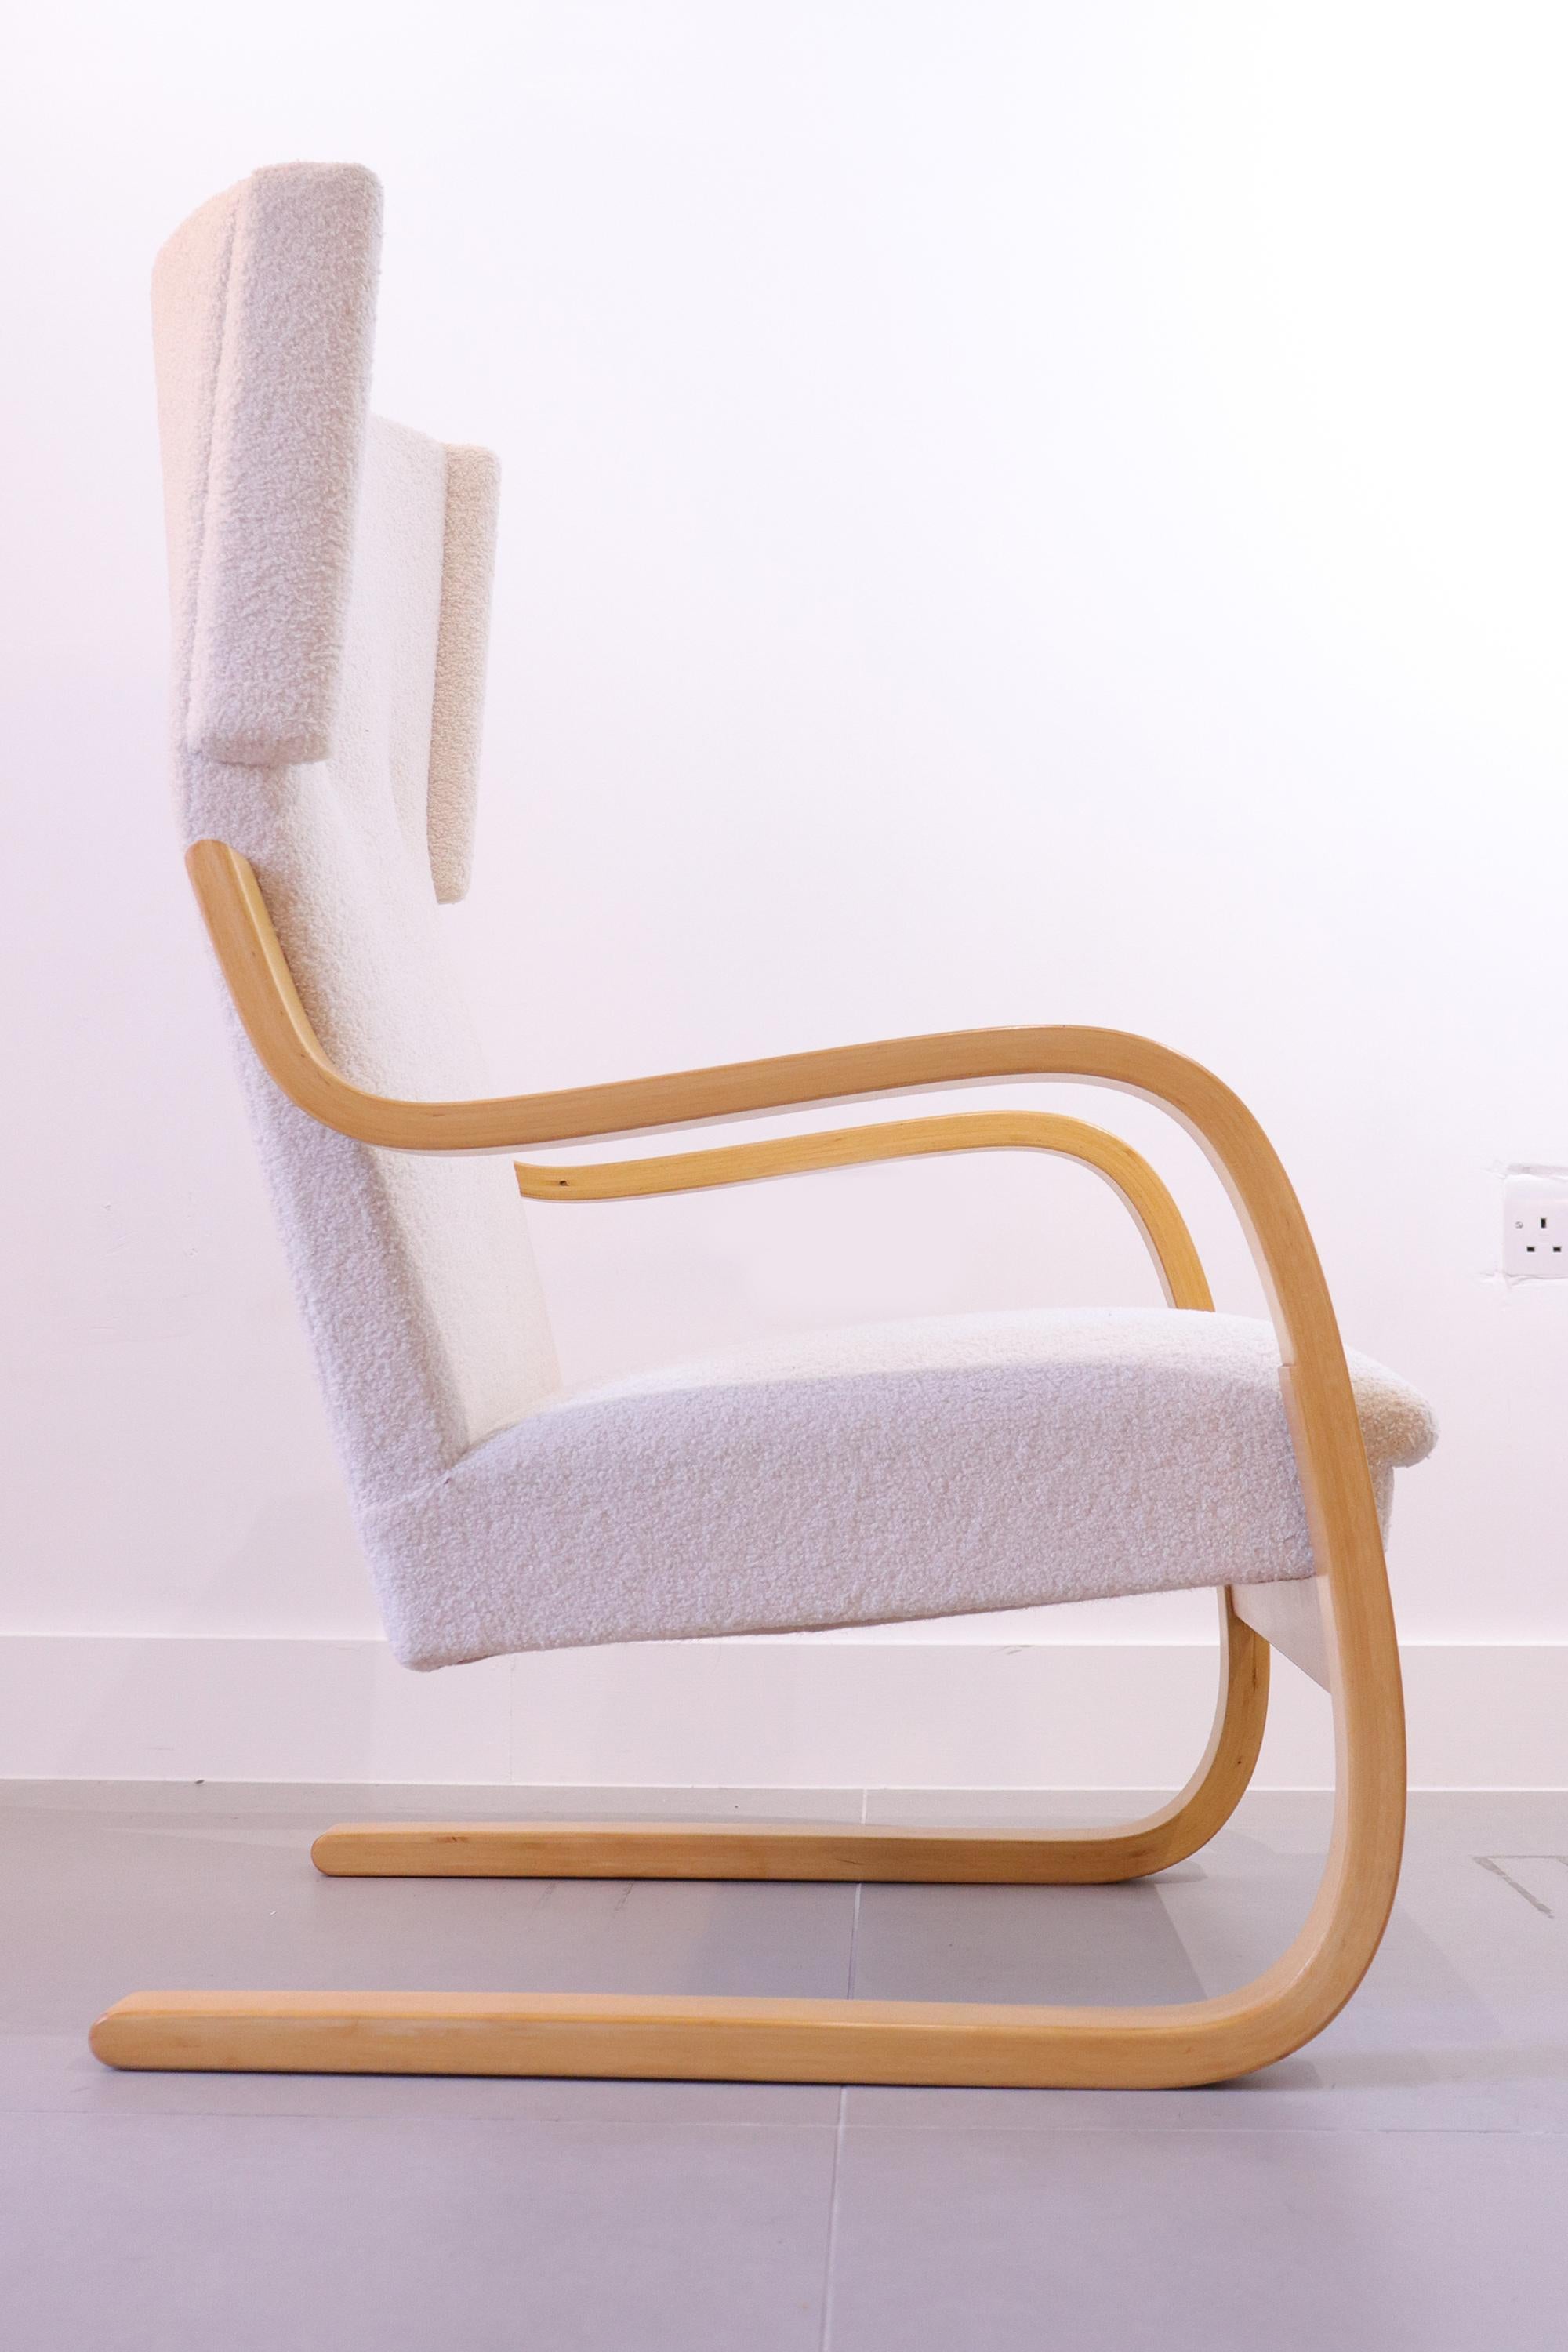 20th Century Alvar Aalto 401 Wingback Chair by Artek Finland, 1970s For Sale